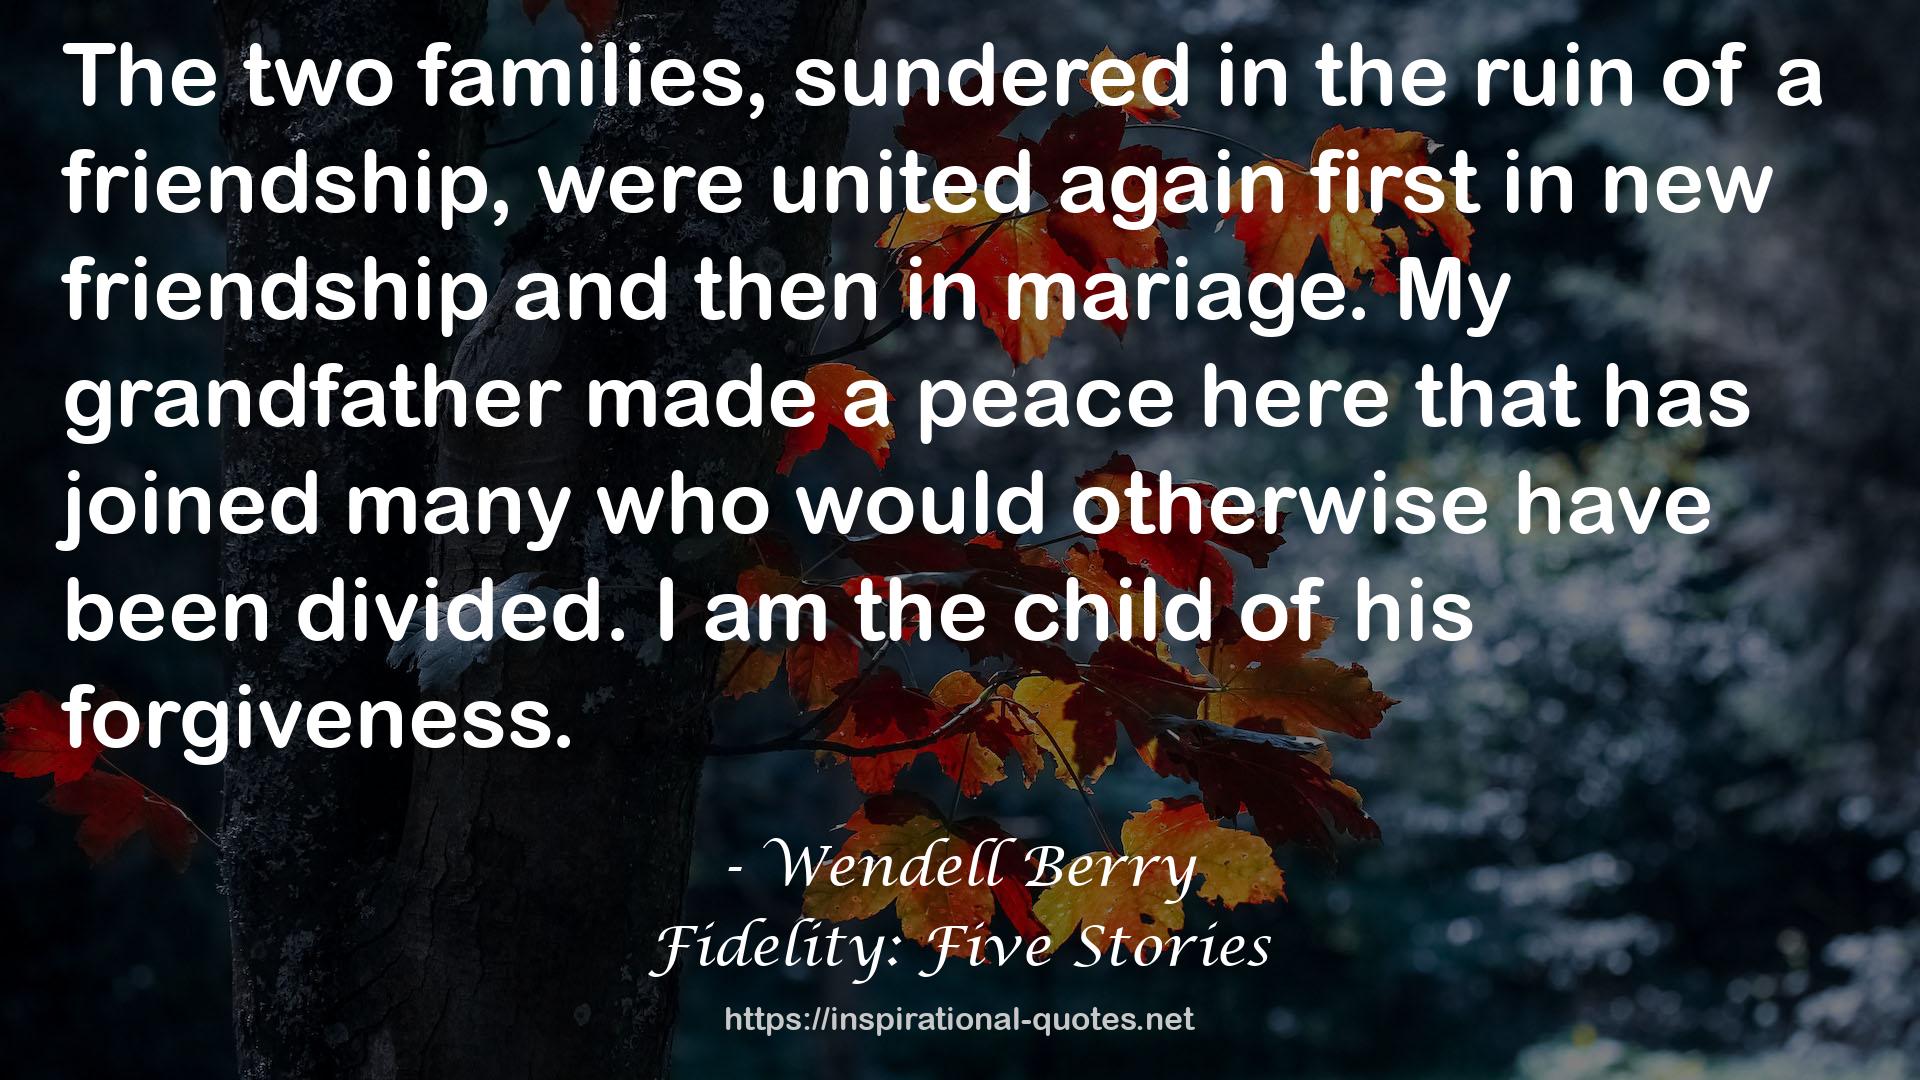 Fidelity: Five Stories QUOTES